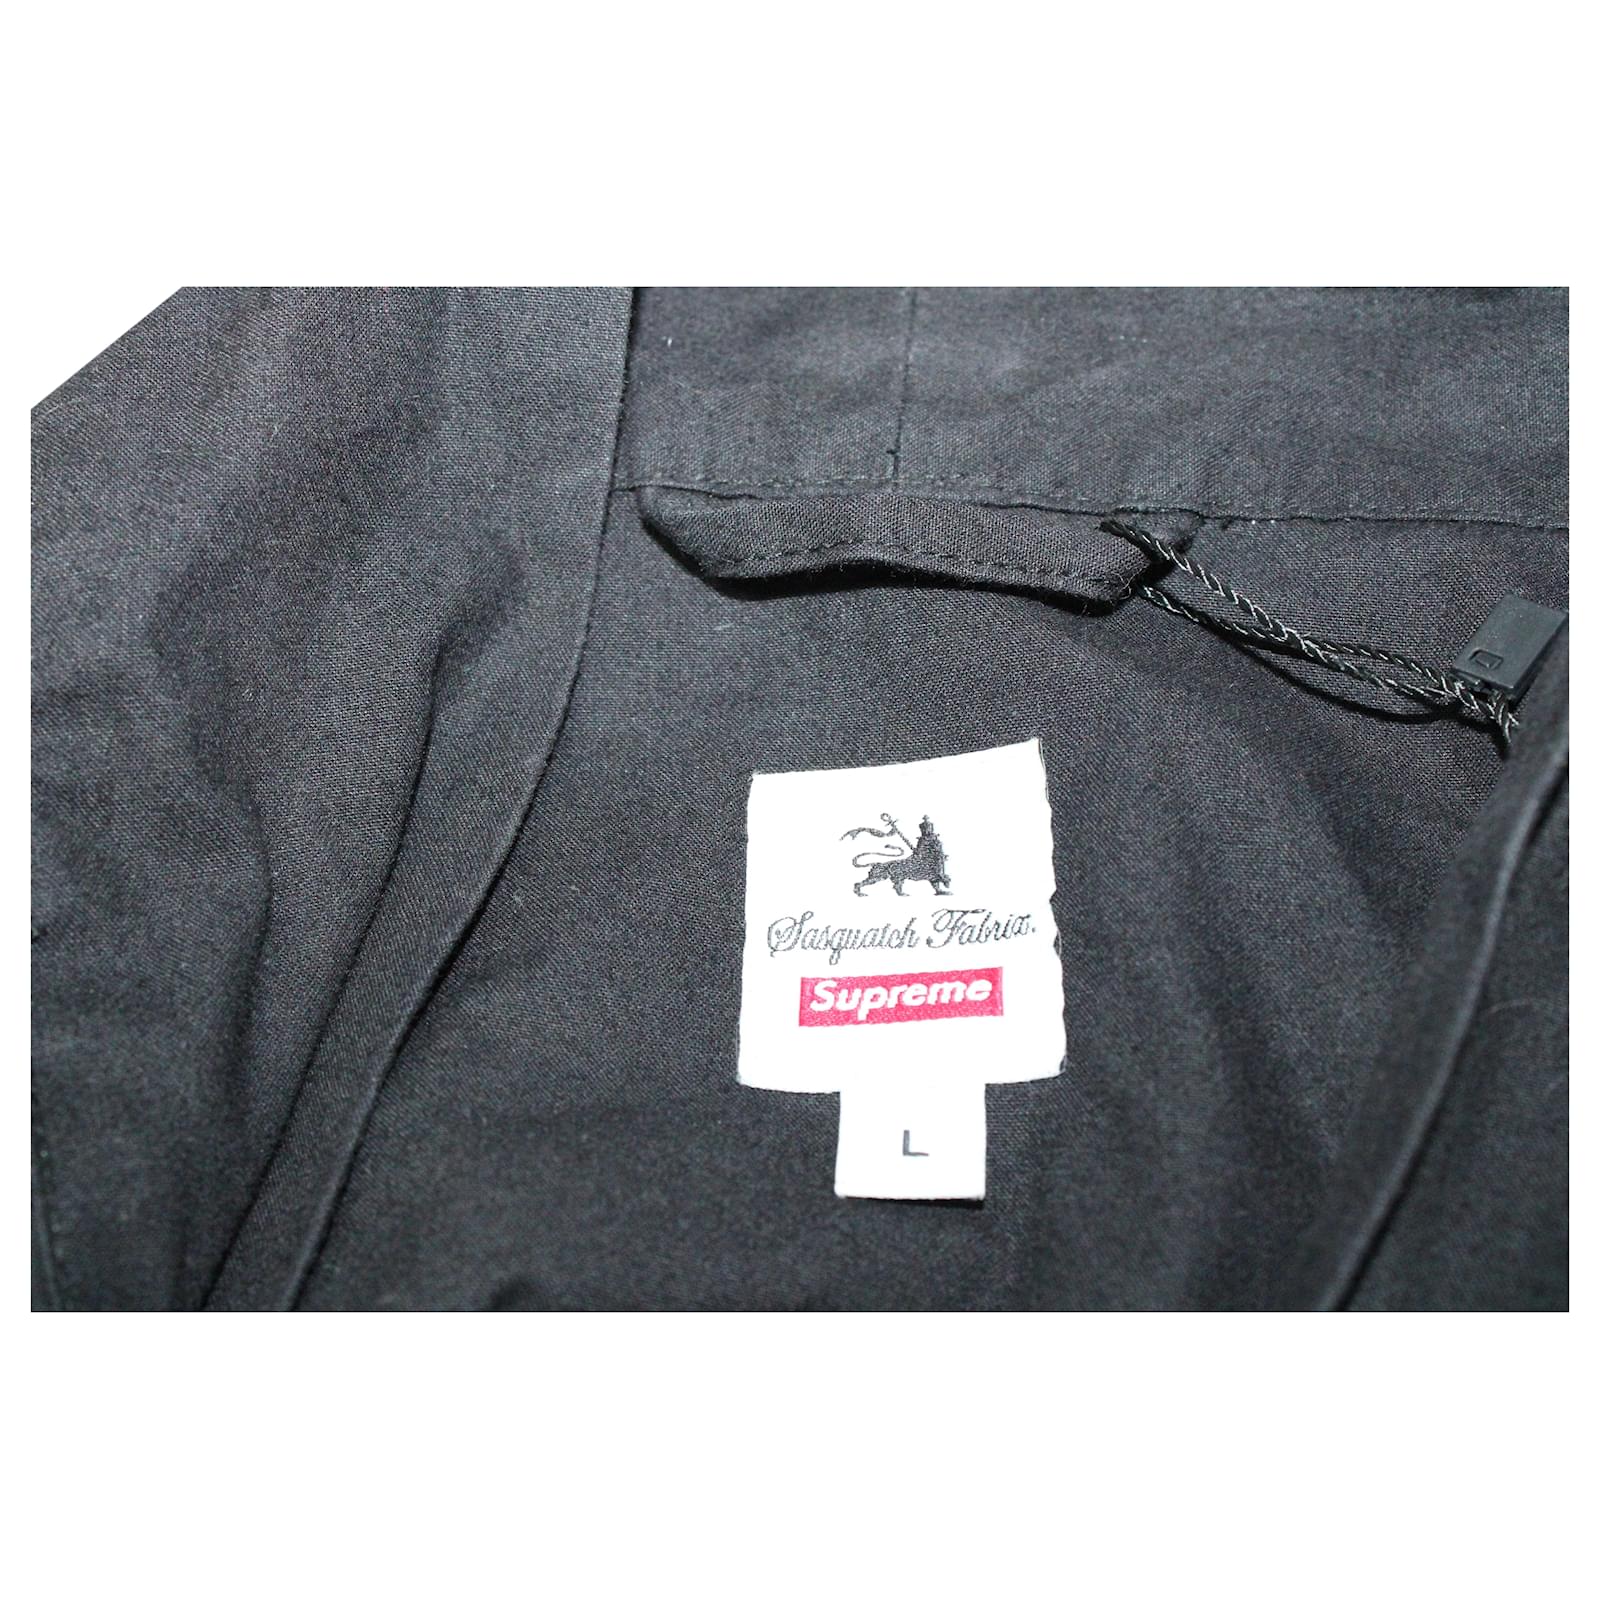 Supreme x Sasquatchfabrix Hanten Kimono Jacket in Black Cotton ref